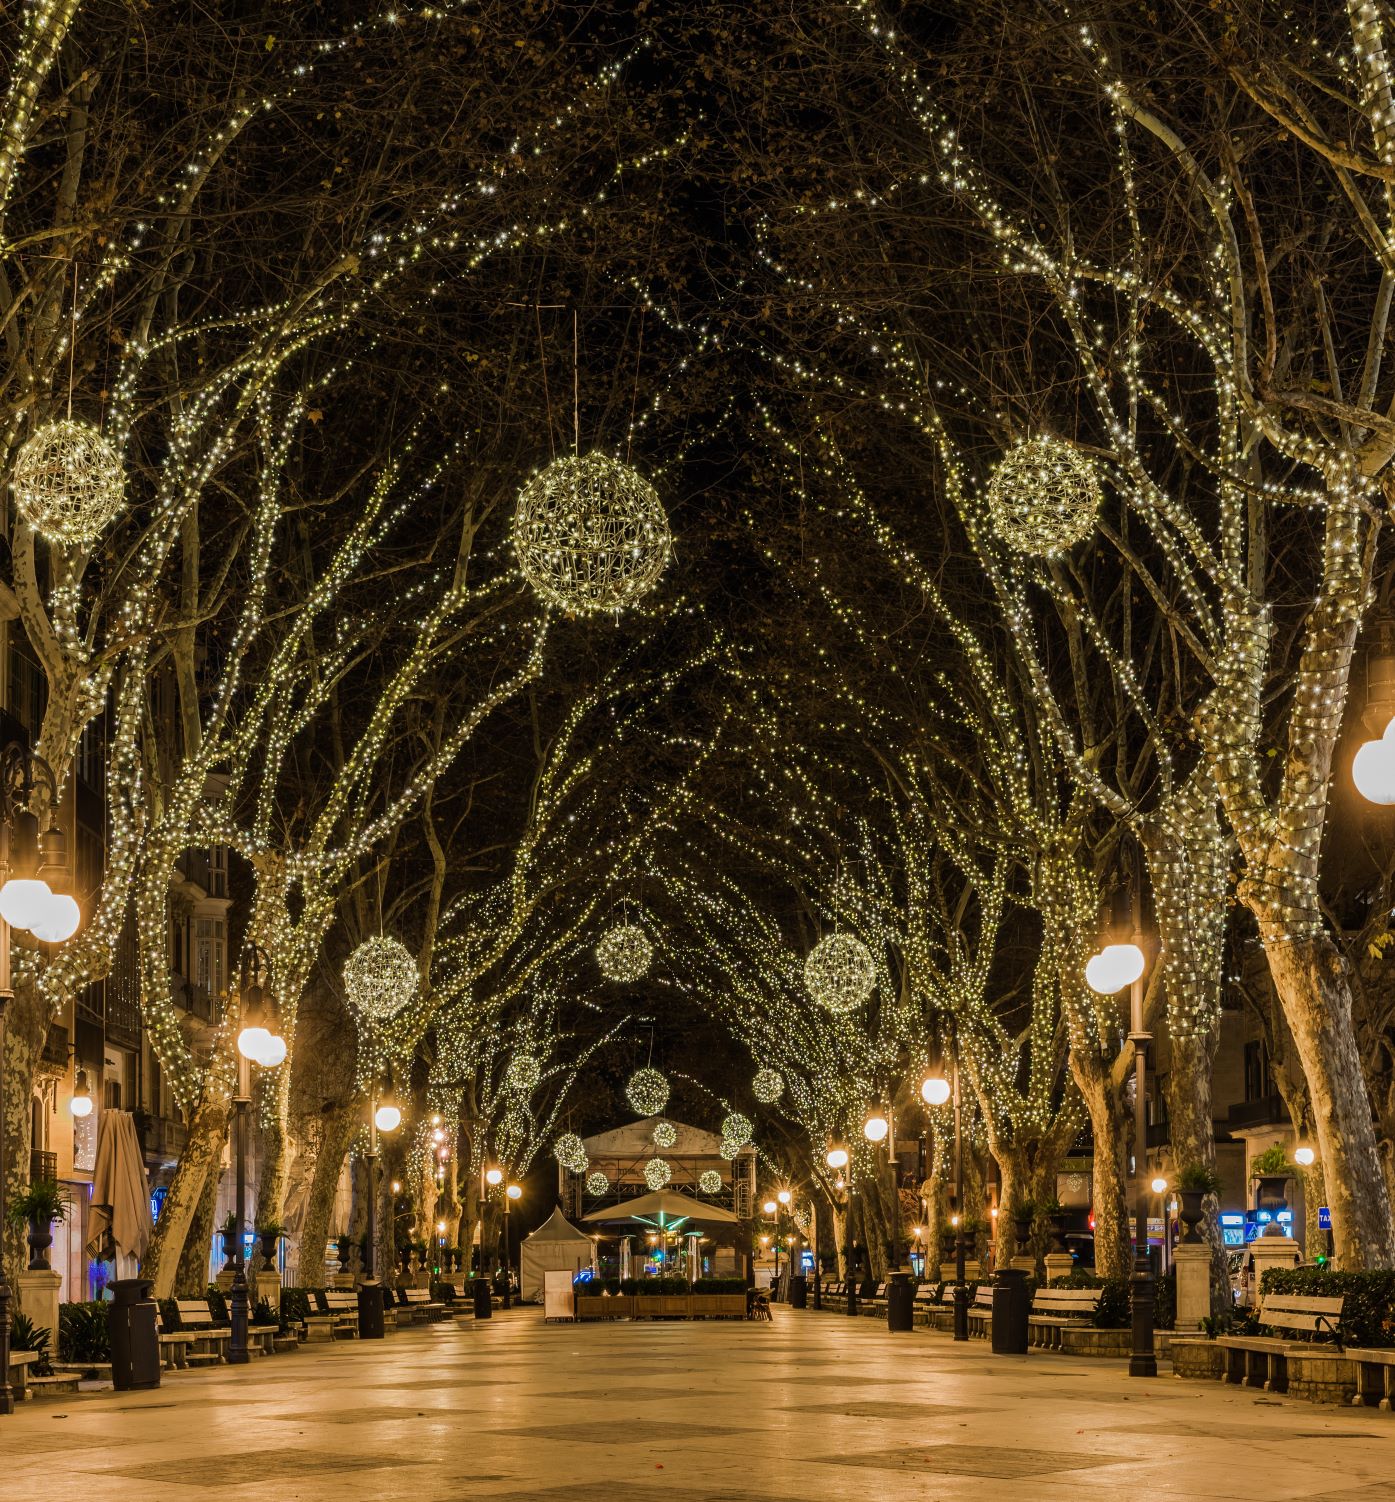 Advent in Spanien: Weihnachtsbeleuchtung in Palma de Mallorca 